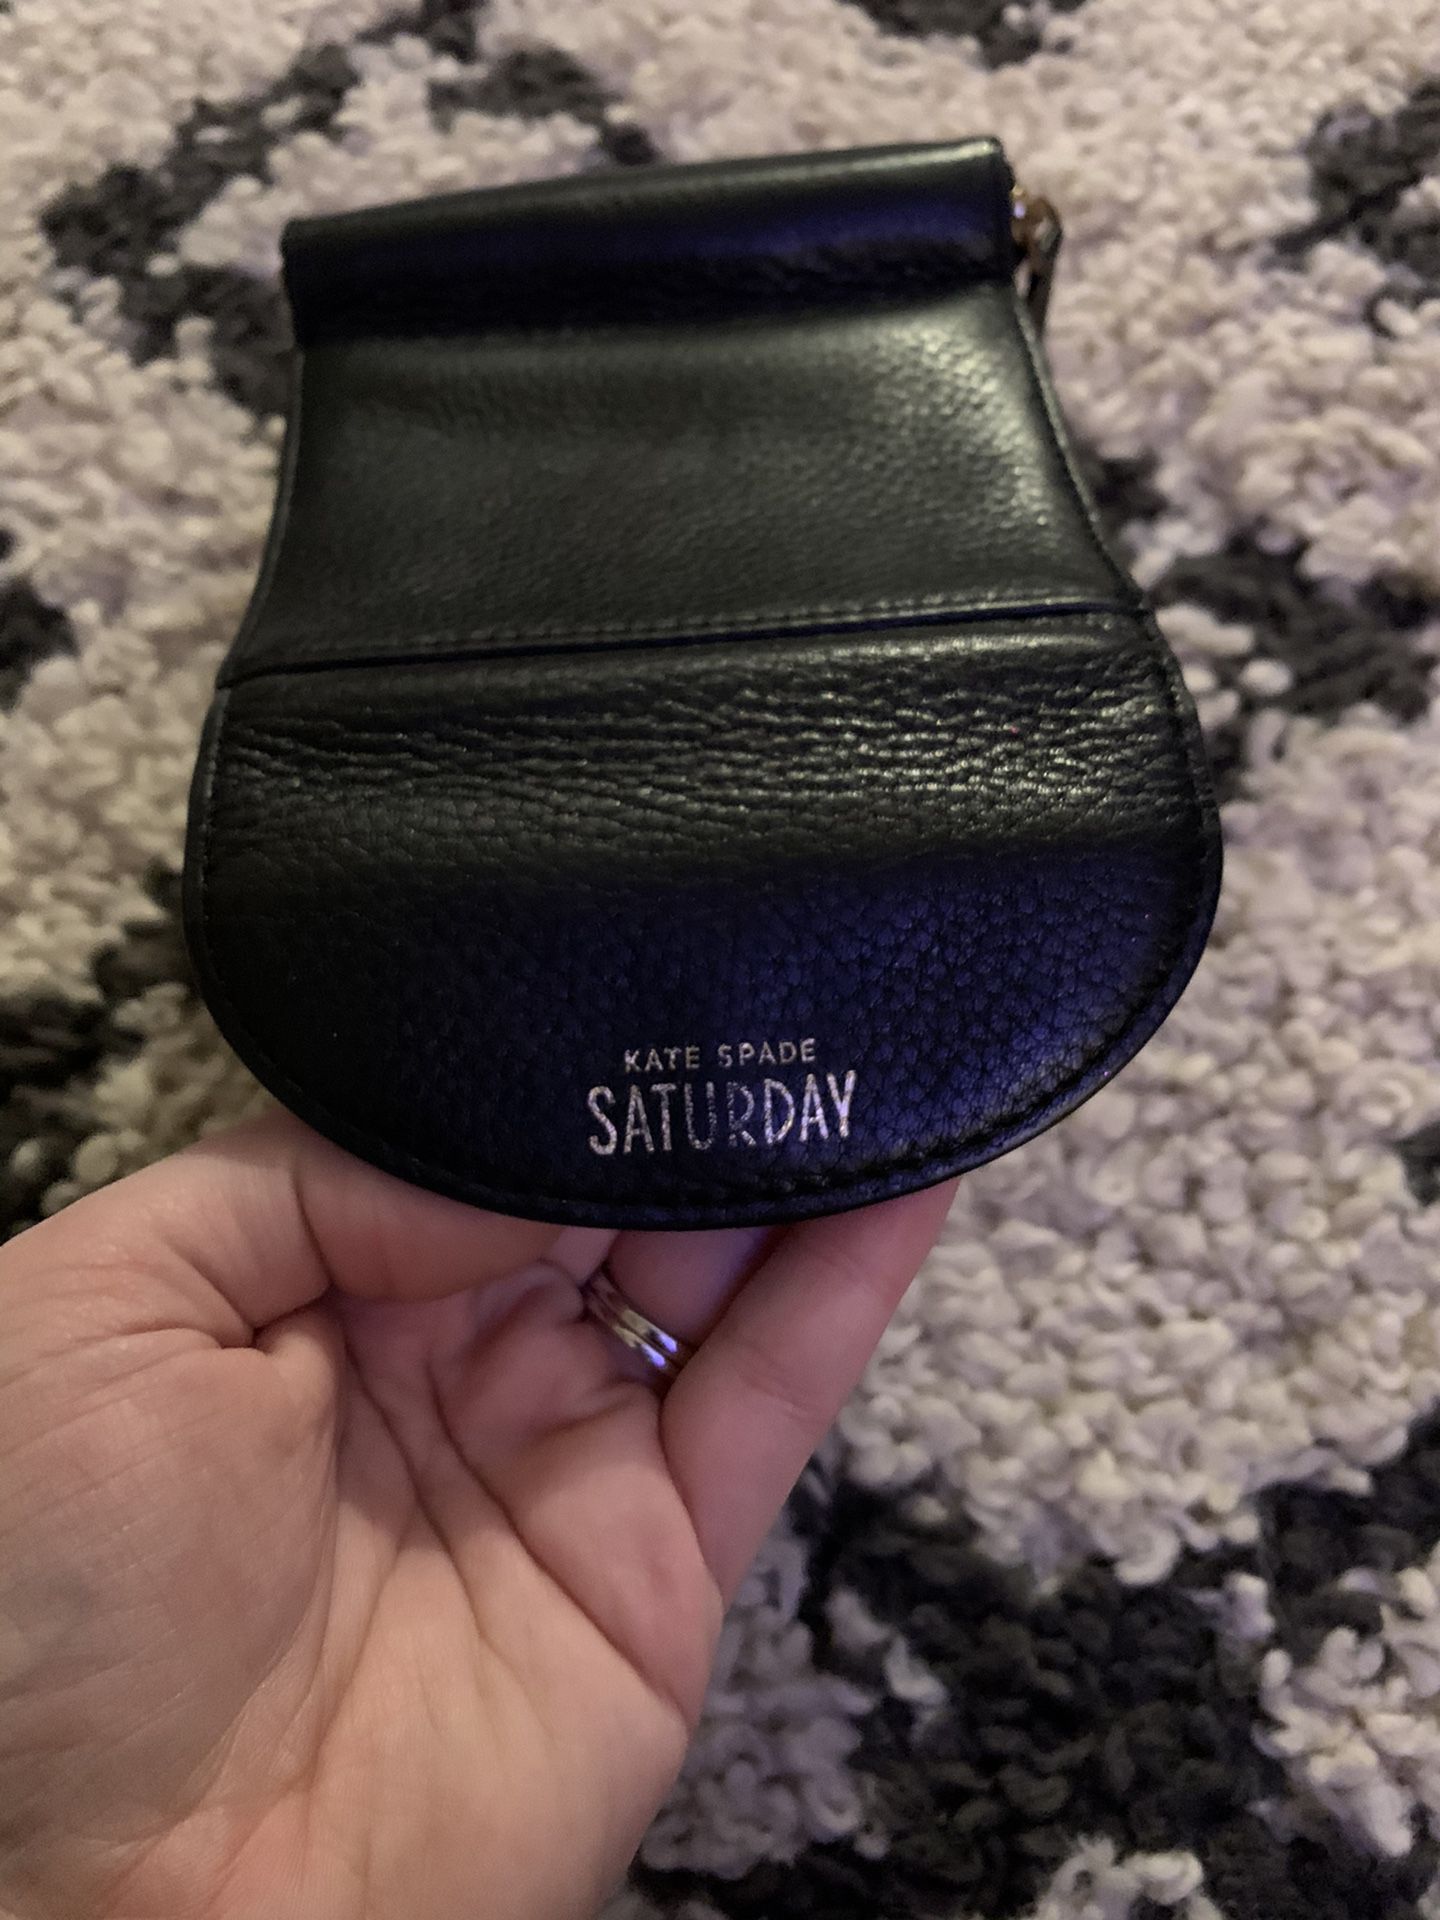 KATE SPADE SATURDAY black leather wallet